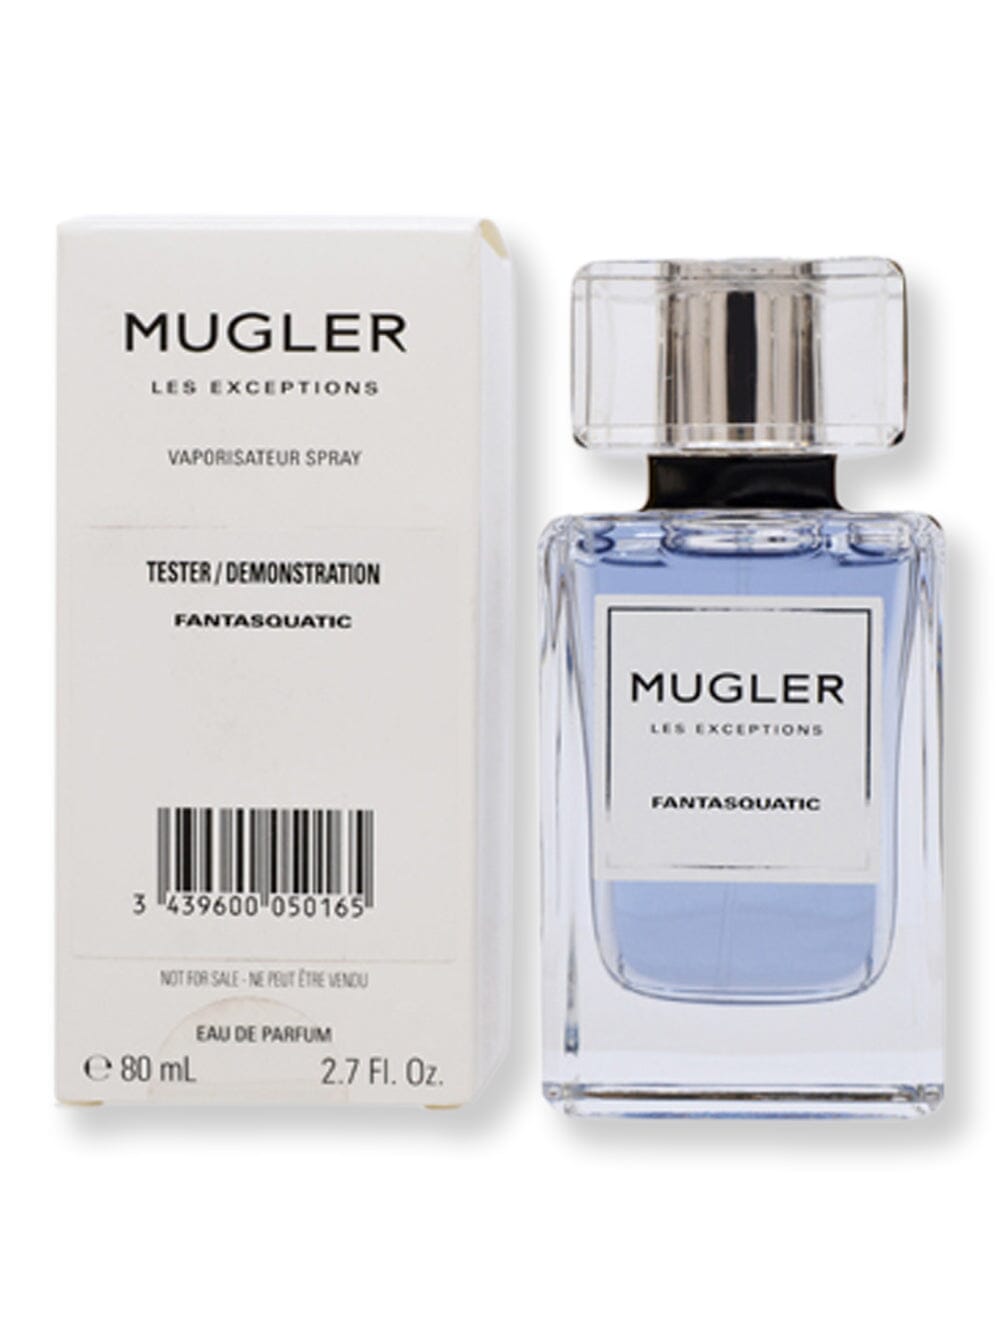 Thierry Mugler Thierry Mugler Les Exceptions Fantasquatic EDP Spray Tester 2.7 oz80 ml Perfume 